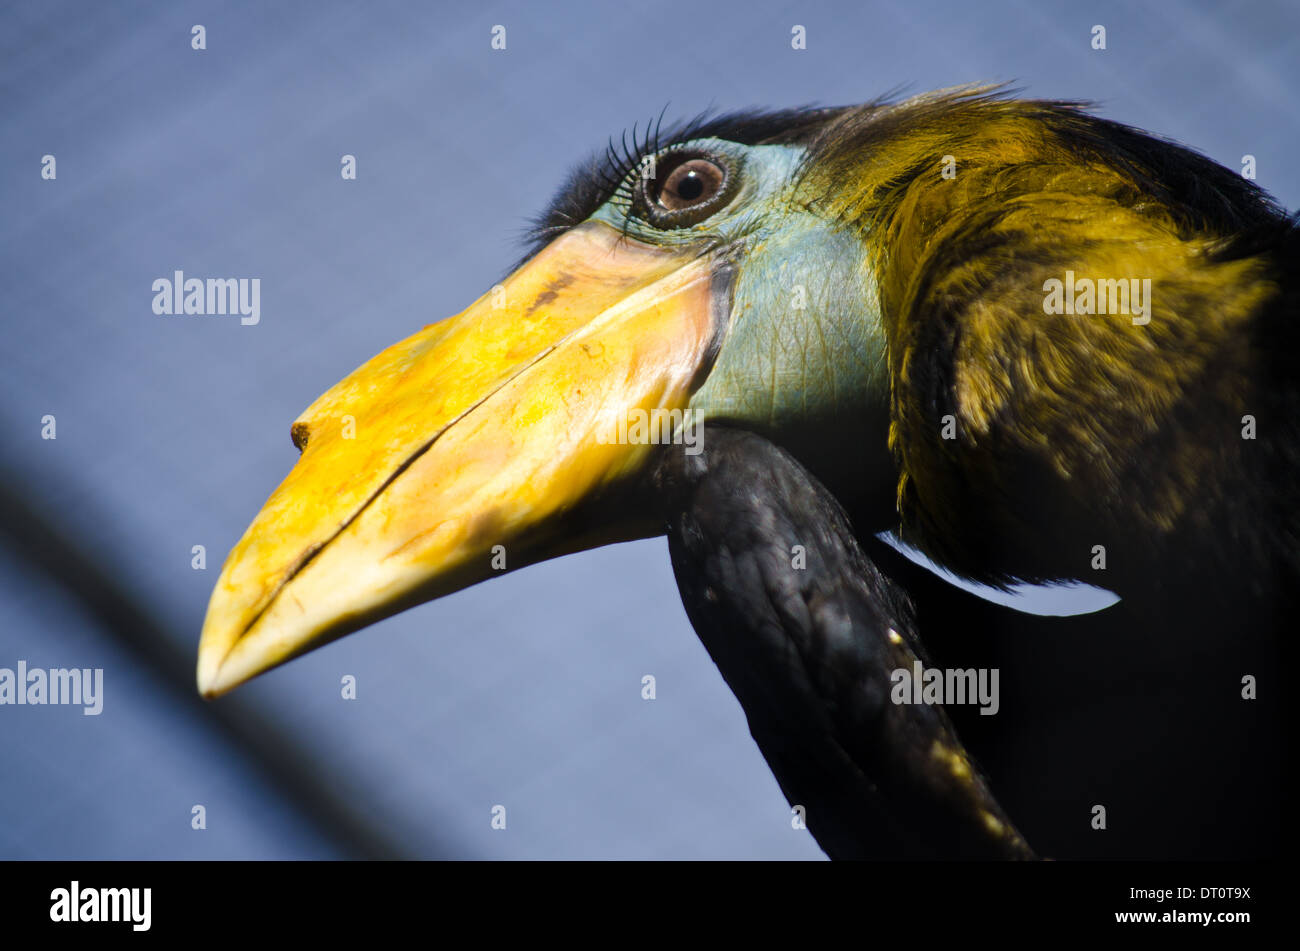 Hornbill with bright yellow beak and long eyelashes Stock Photo